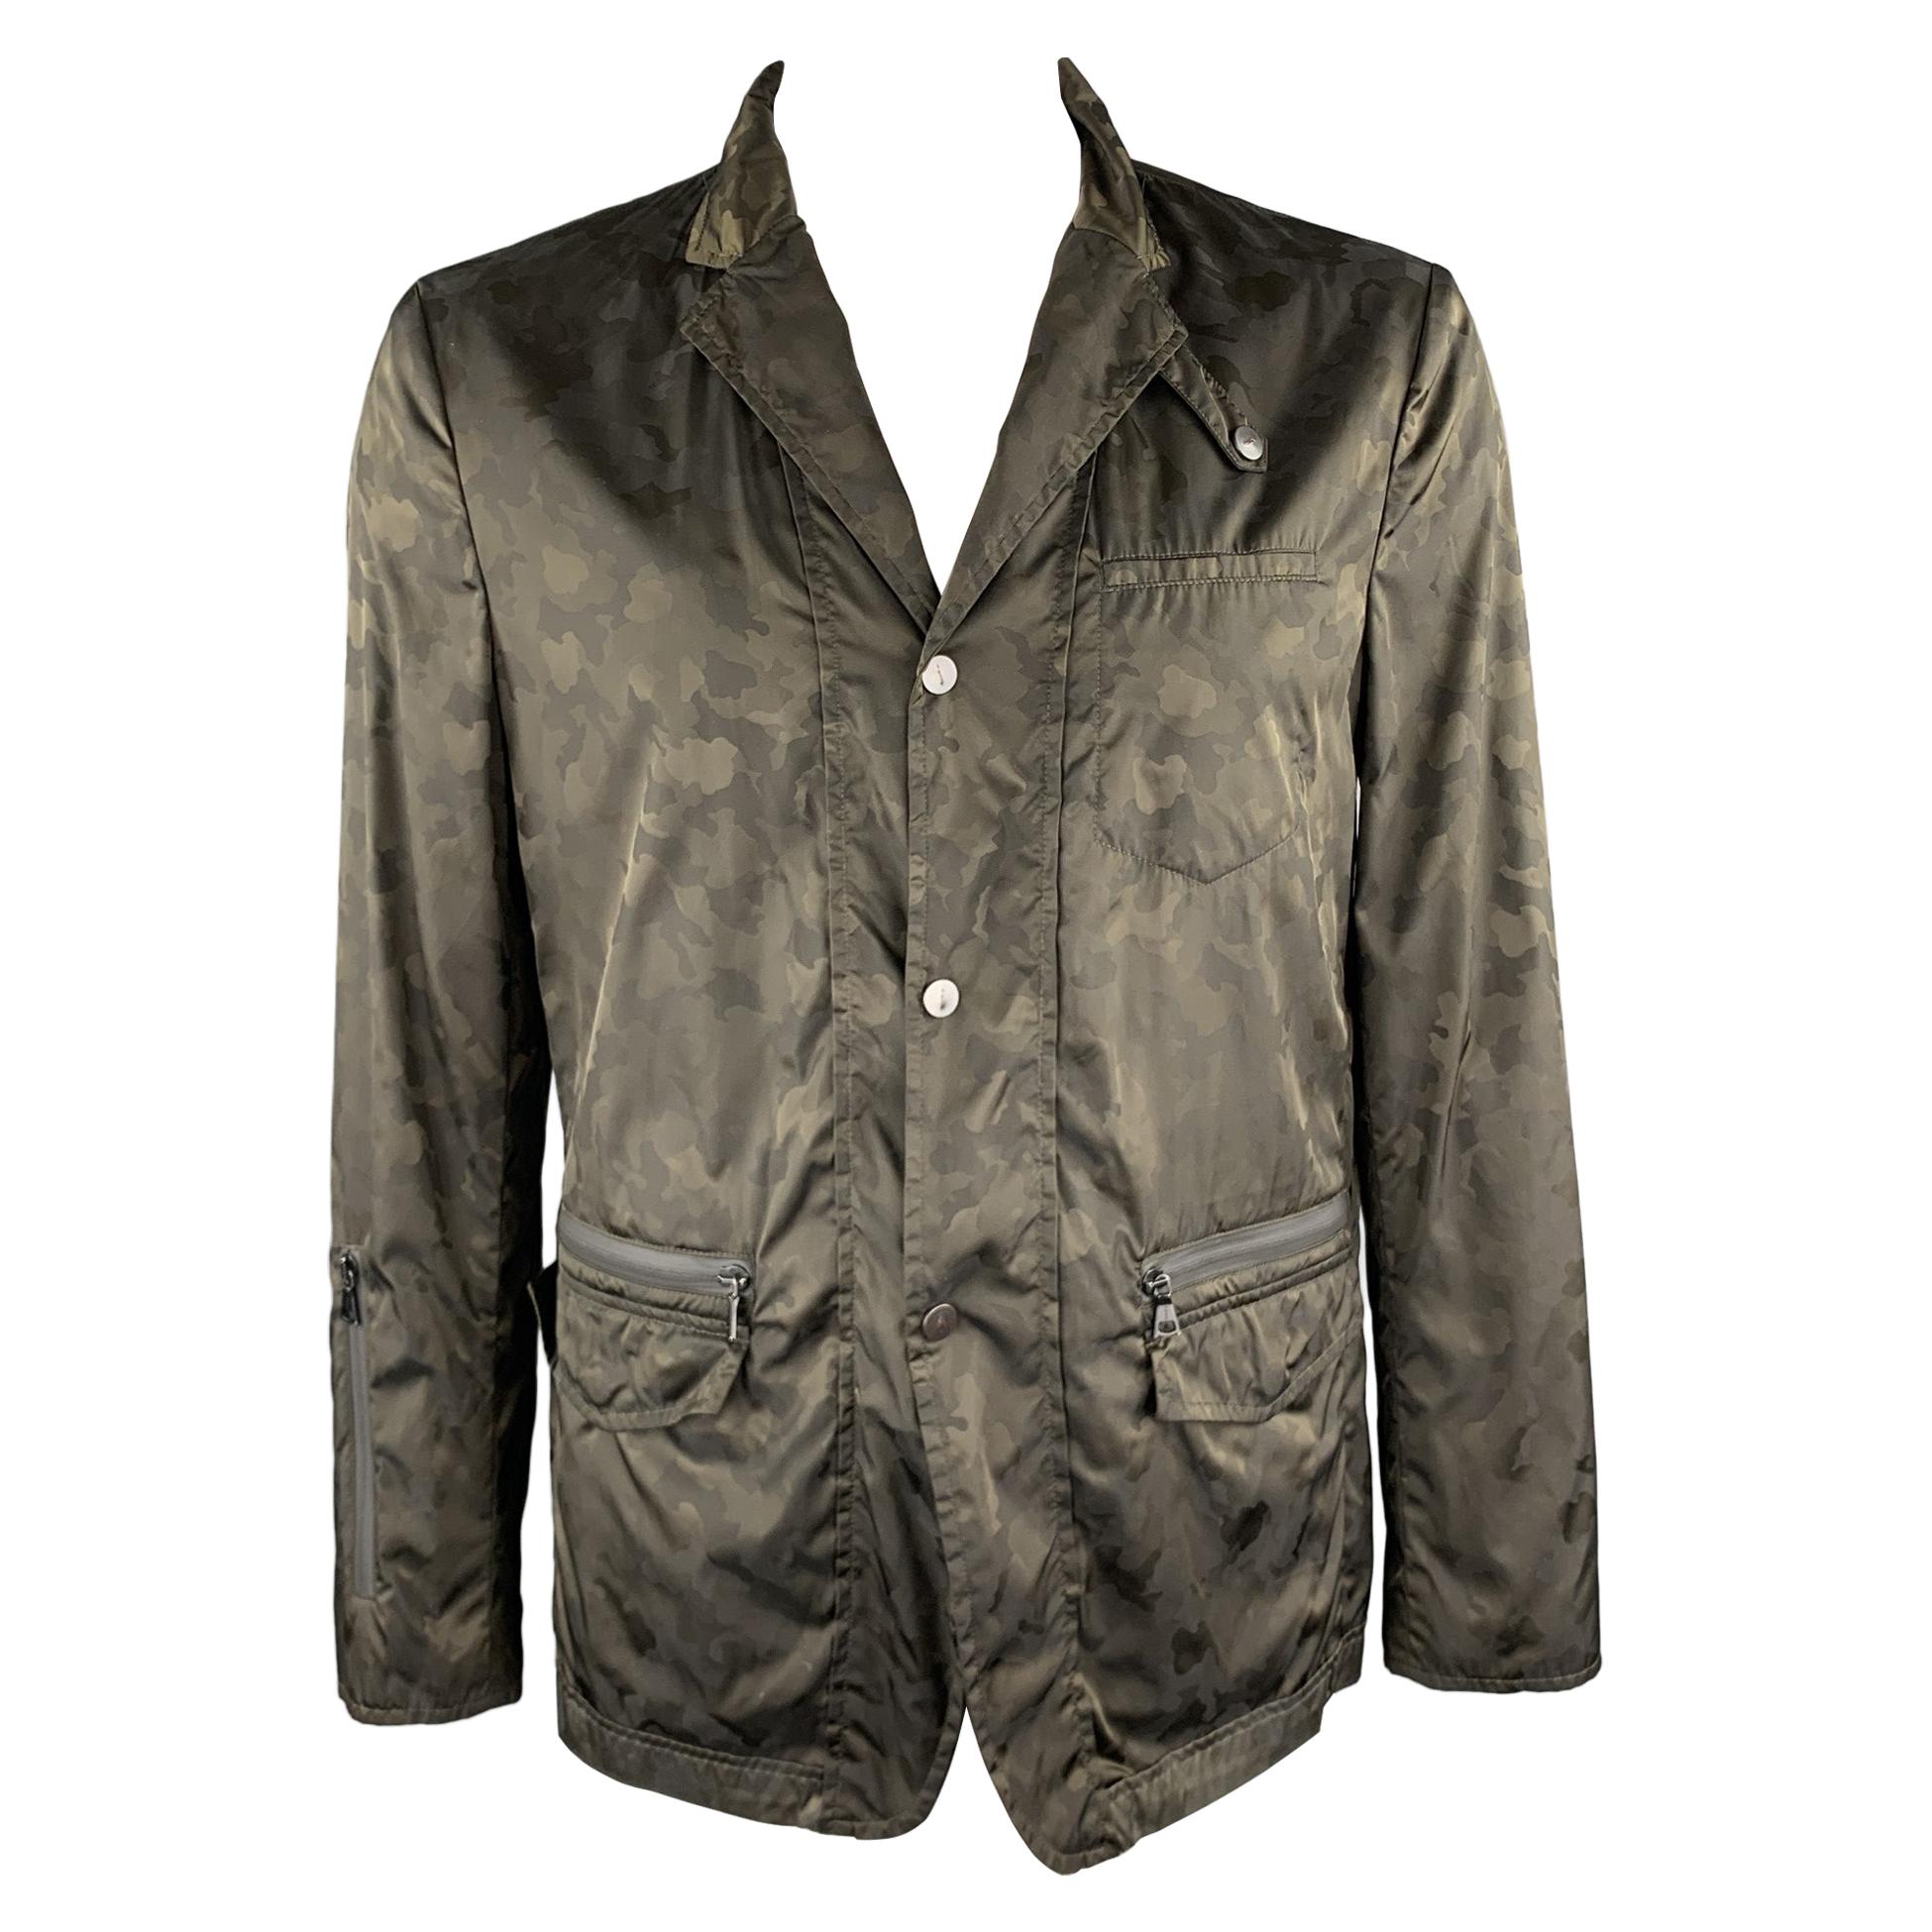 JOHN VARVATOS Size L Olive Camouflage Windbreaker Snap Jacket